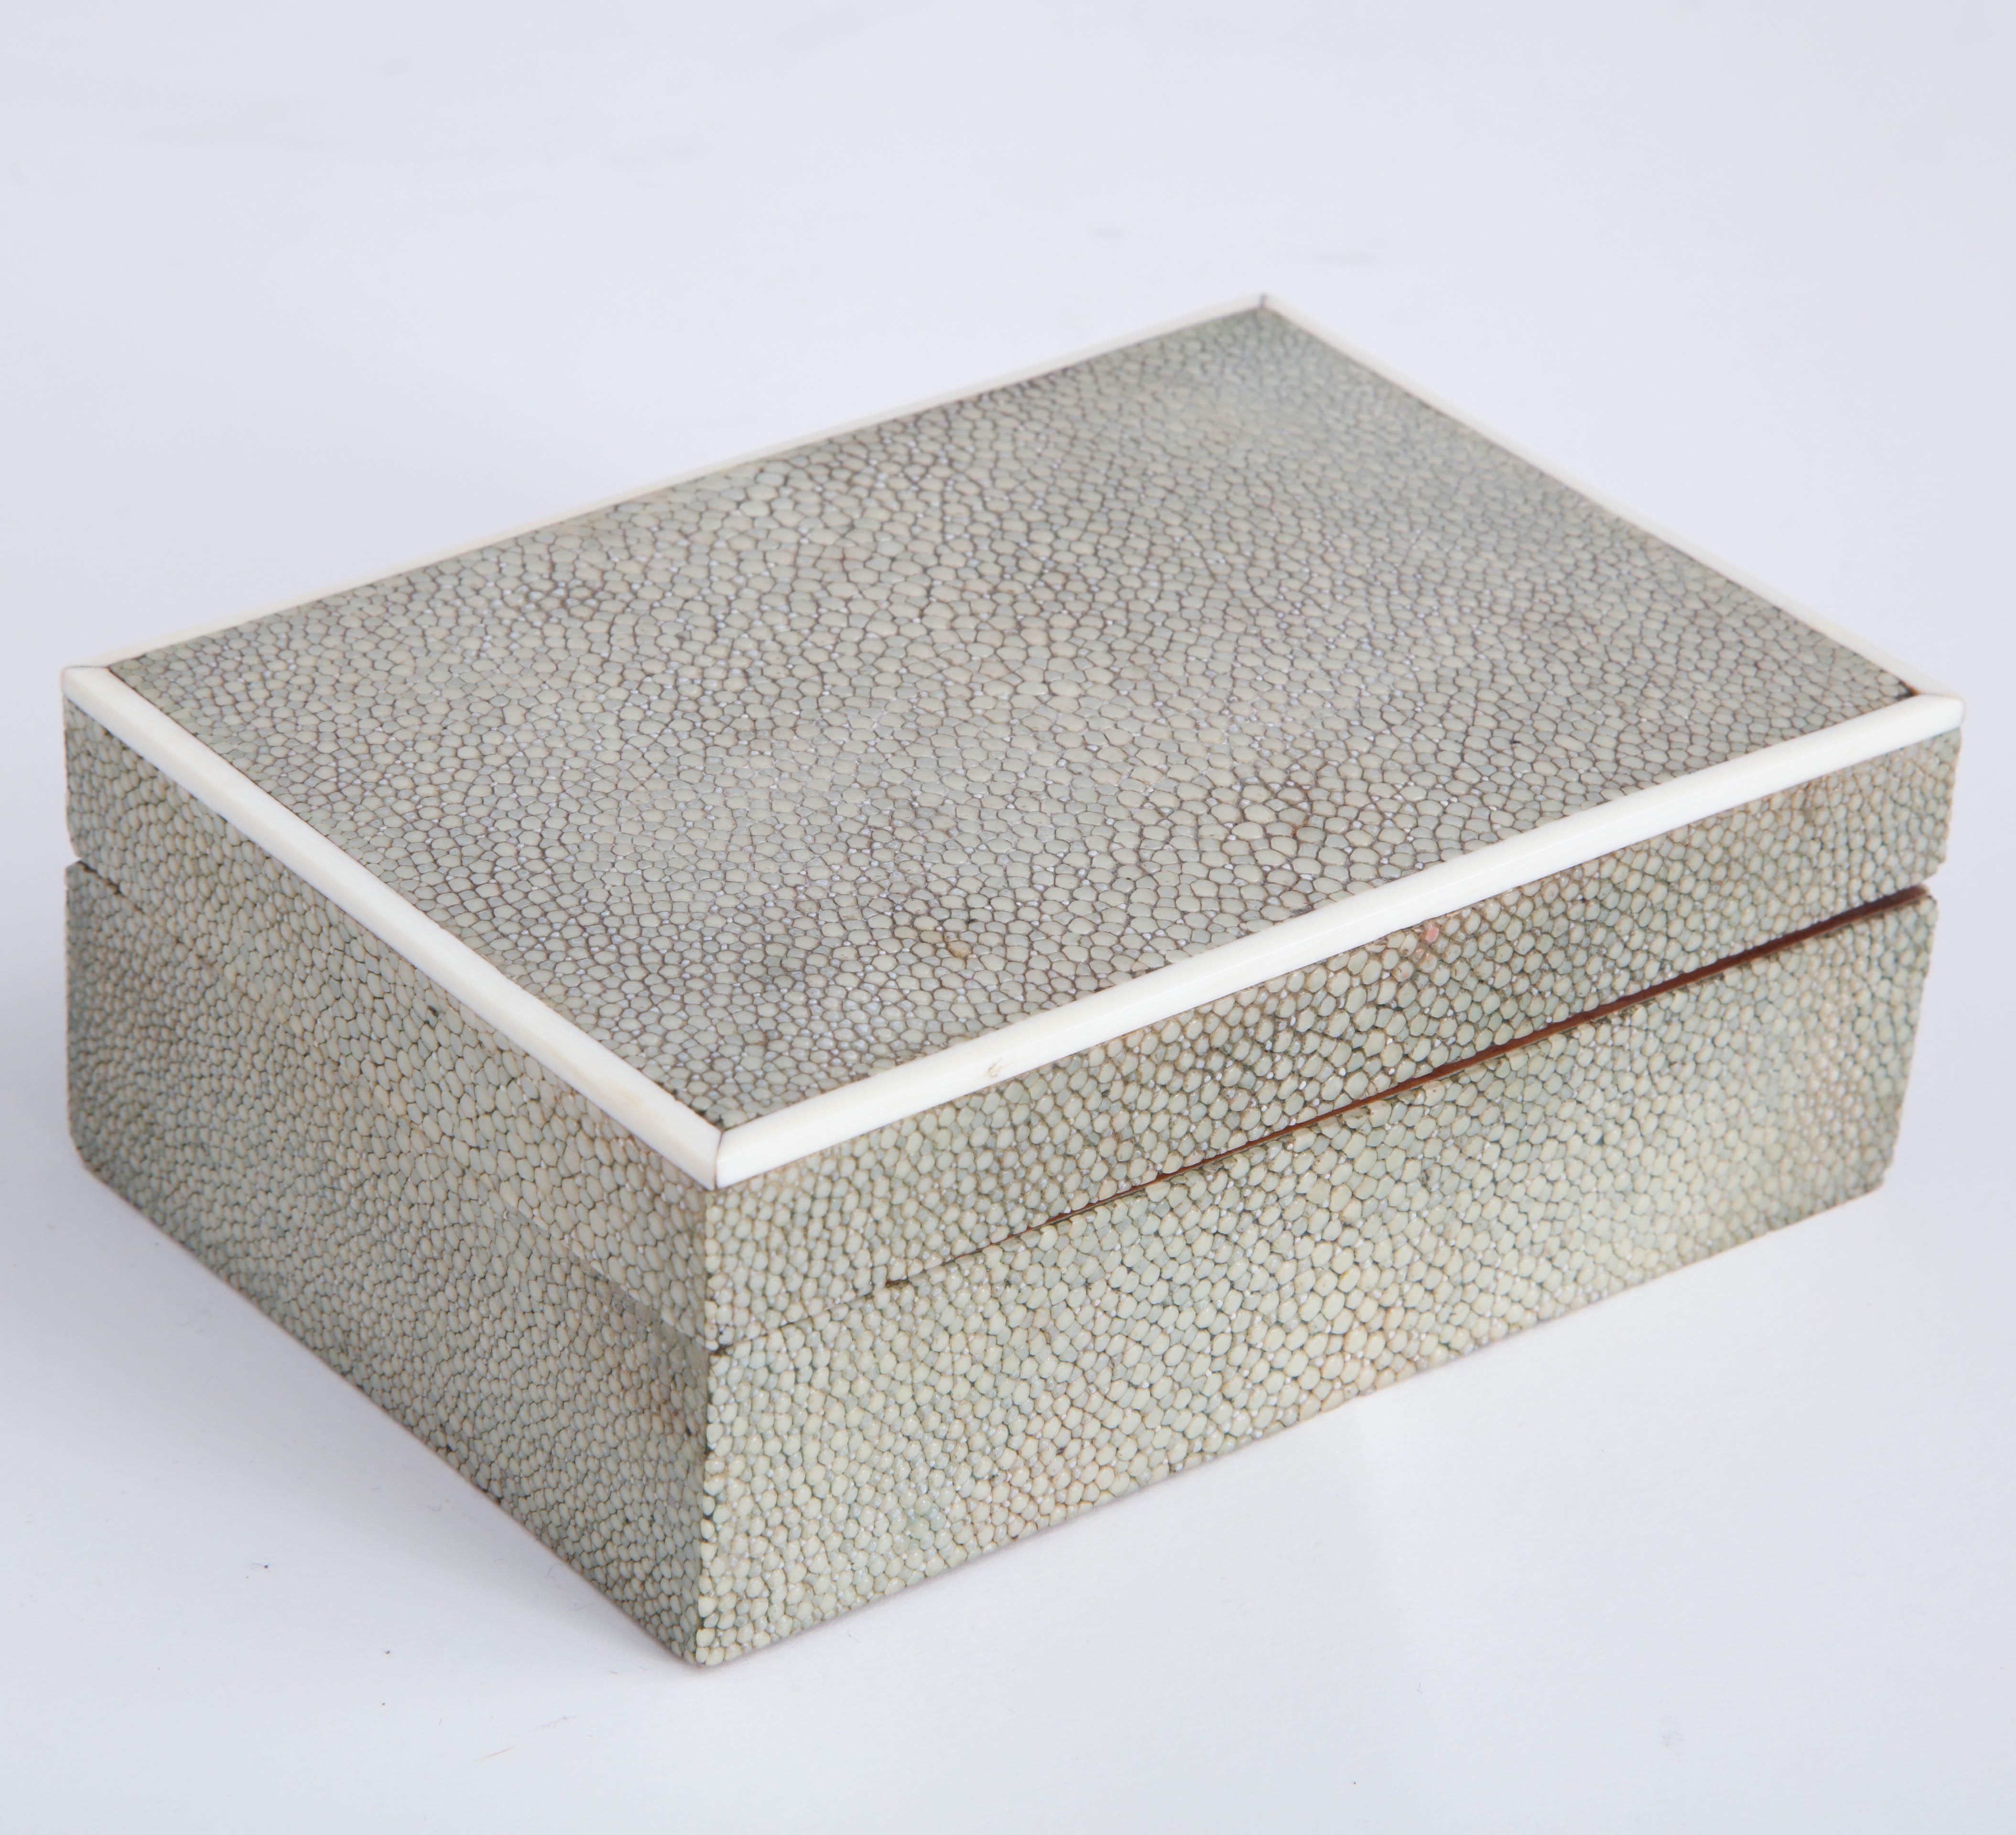 Early 20th century shagreen box, ivory inlaid.